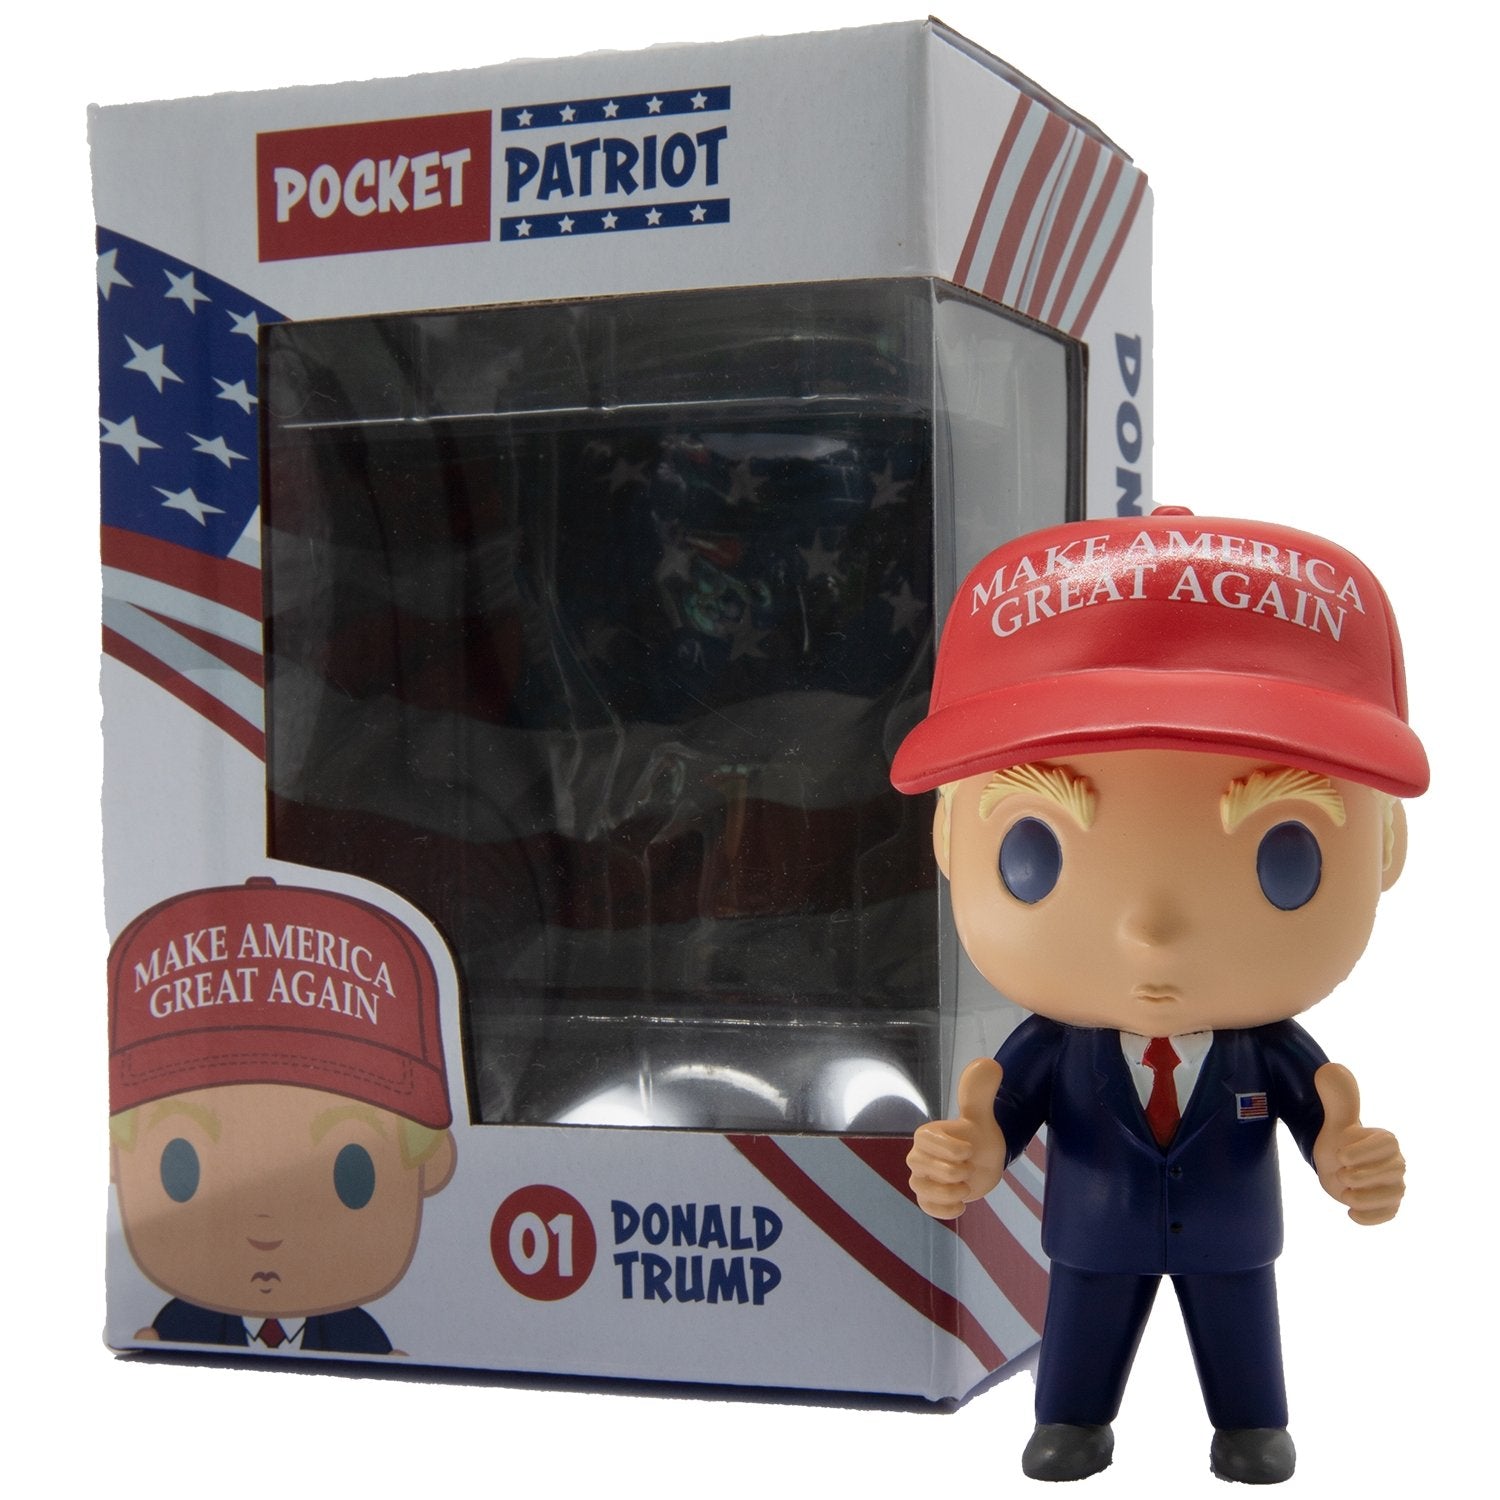 Pocket Patriot #1 - Donald Trump - Proud Patriots